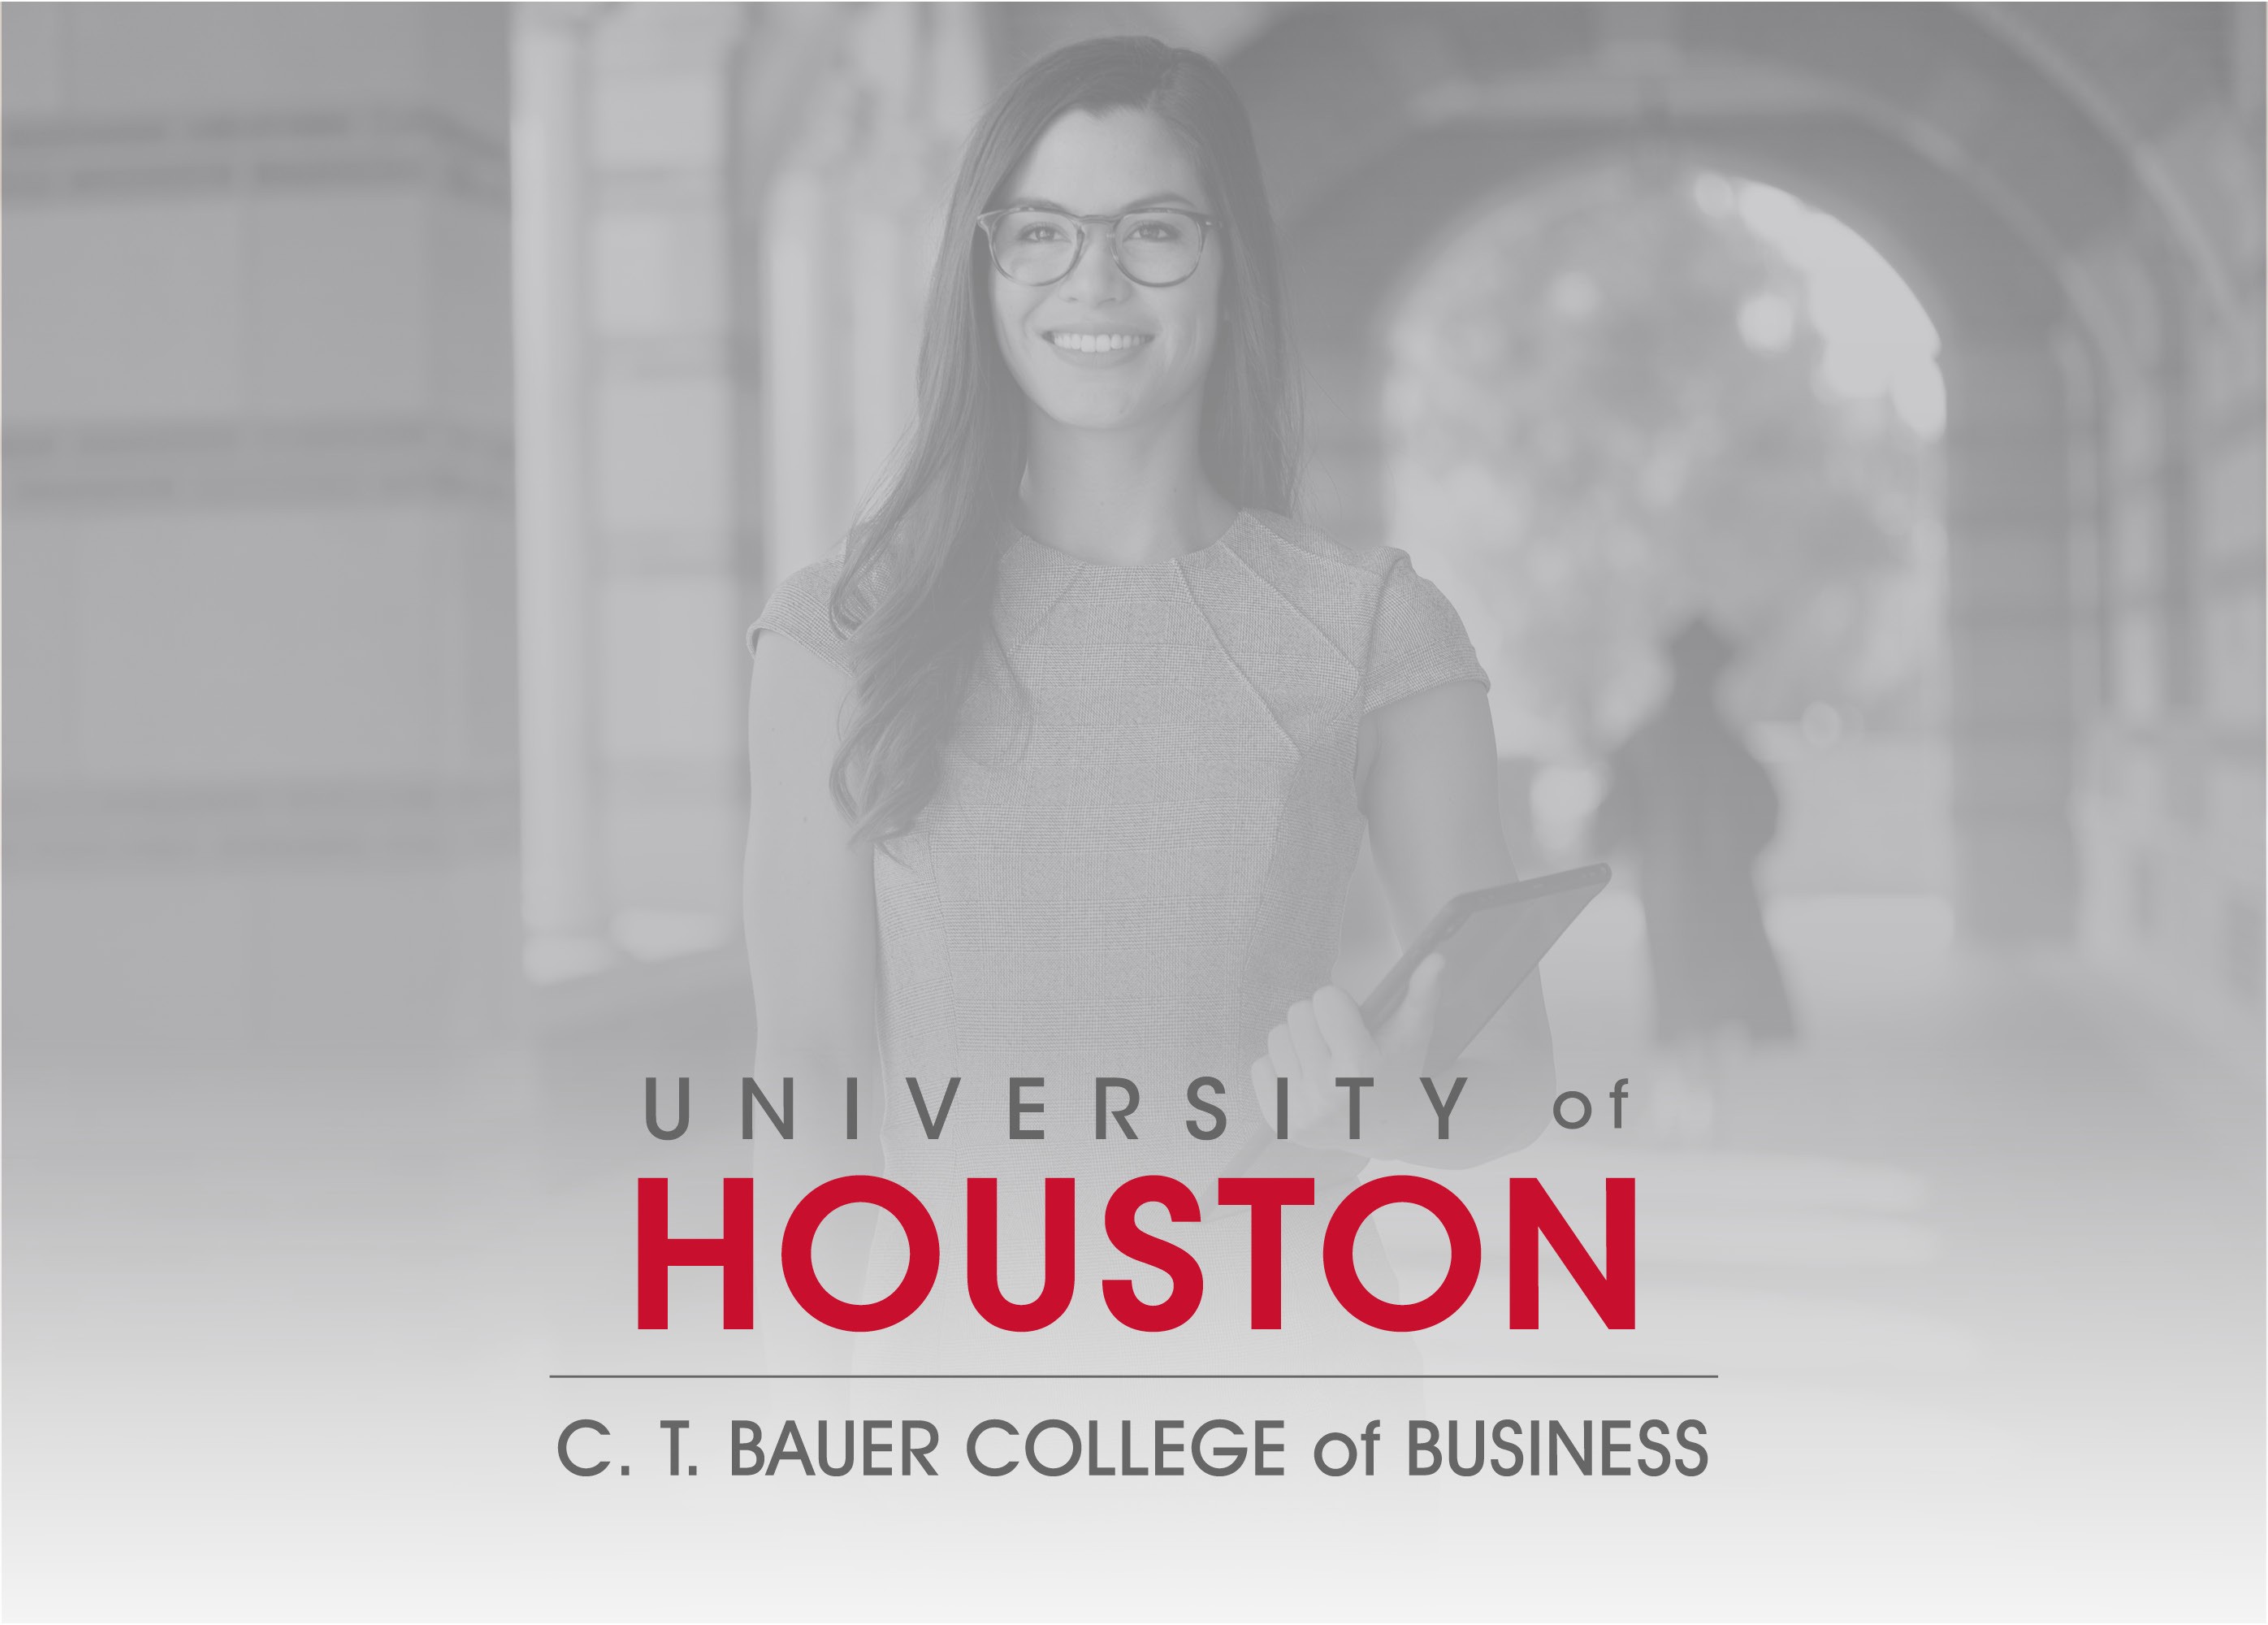 University of Houston C.T. Bauer School of Business success story